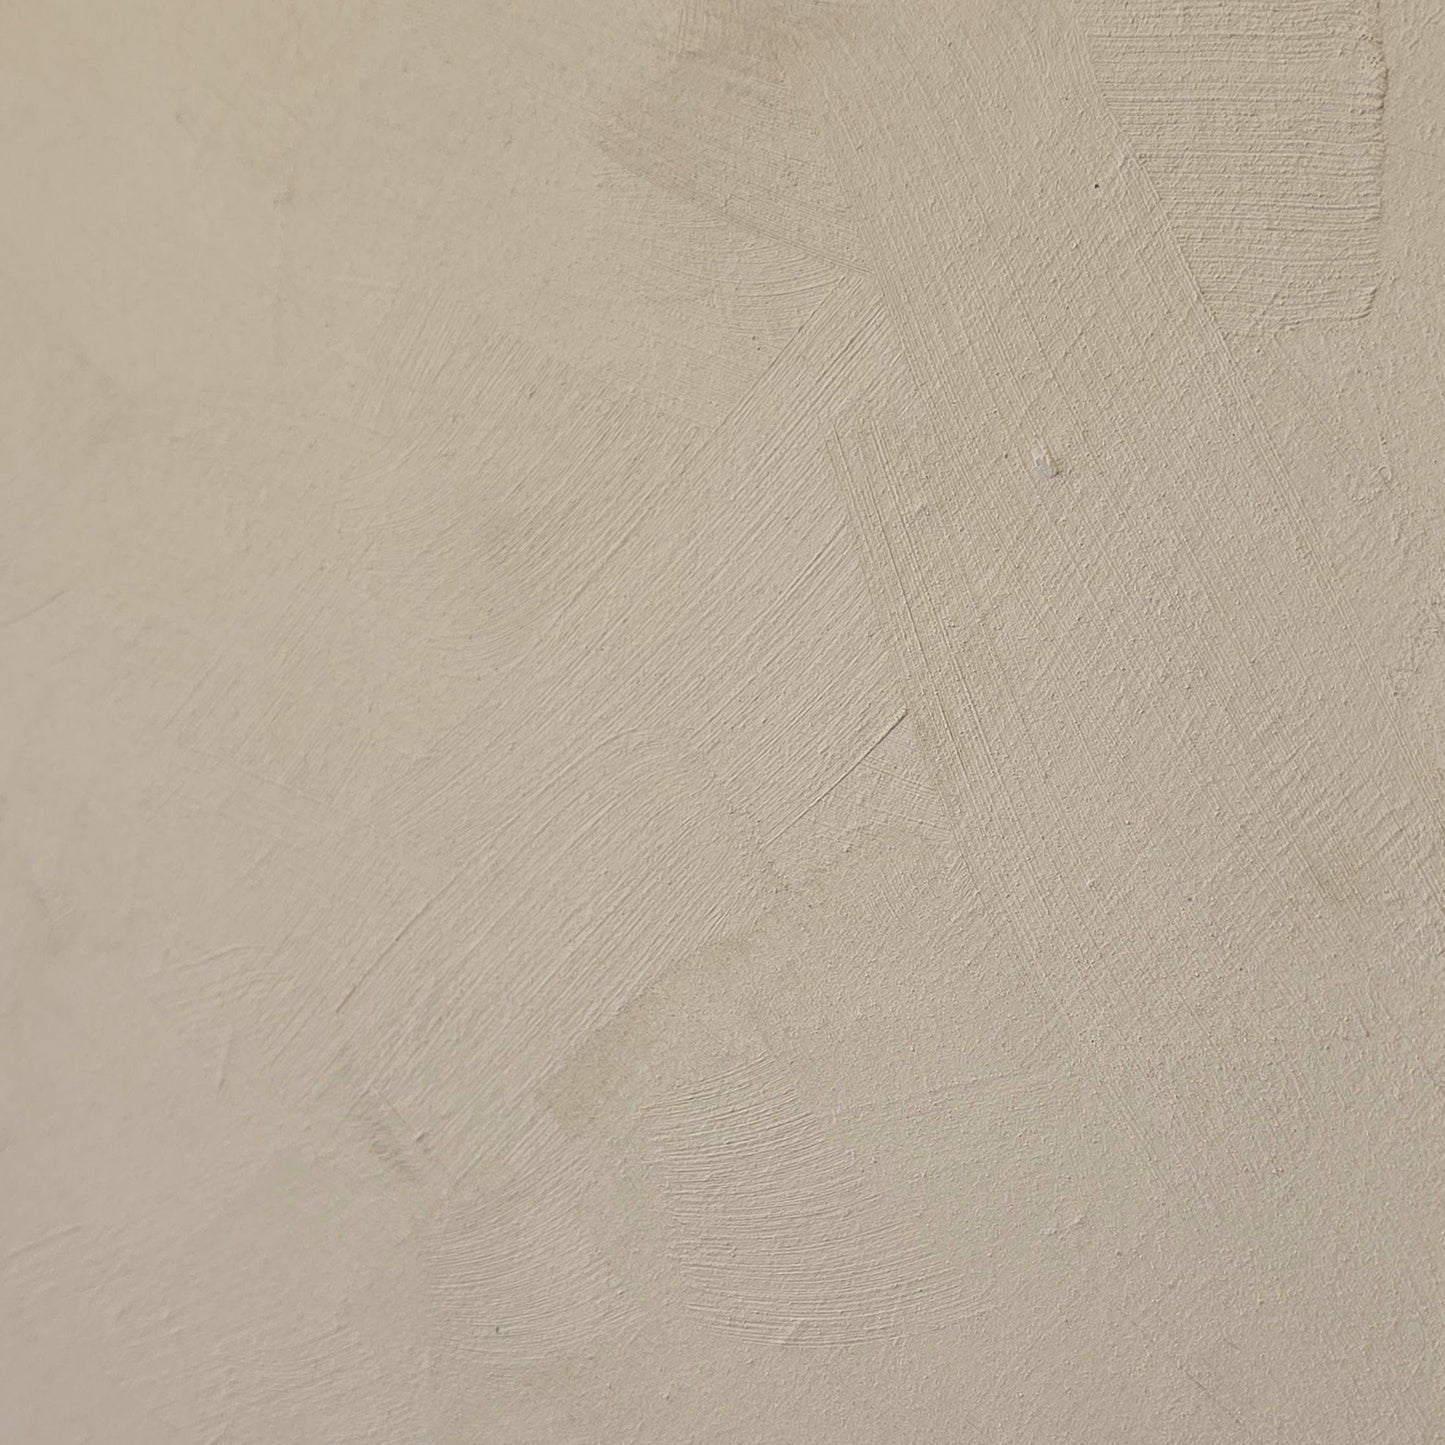 La Duna - Beige Brown Limewash Wall Paint